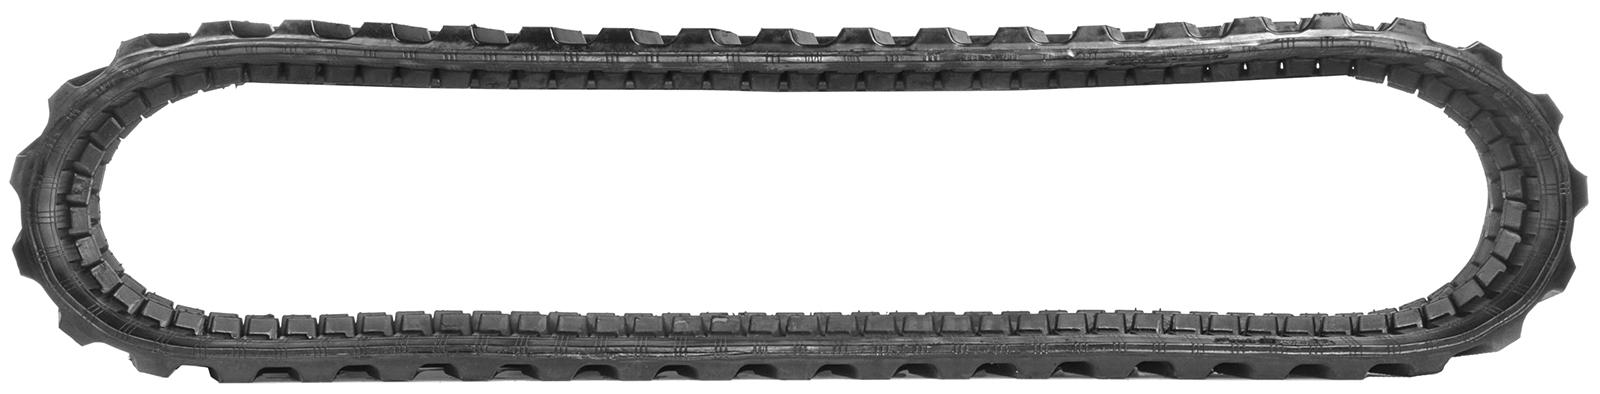 set of 2 14" heavy duty rubber track (350x52.5x86)